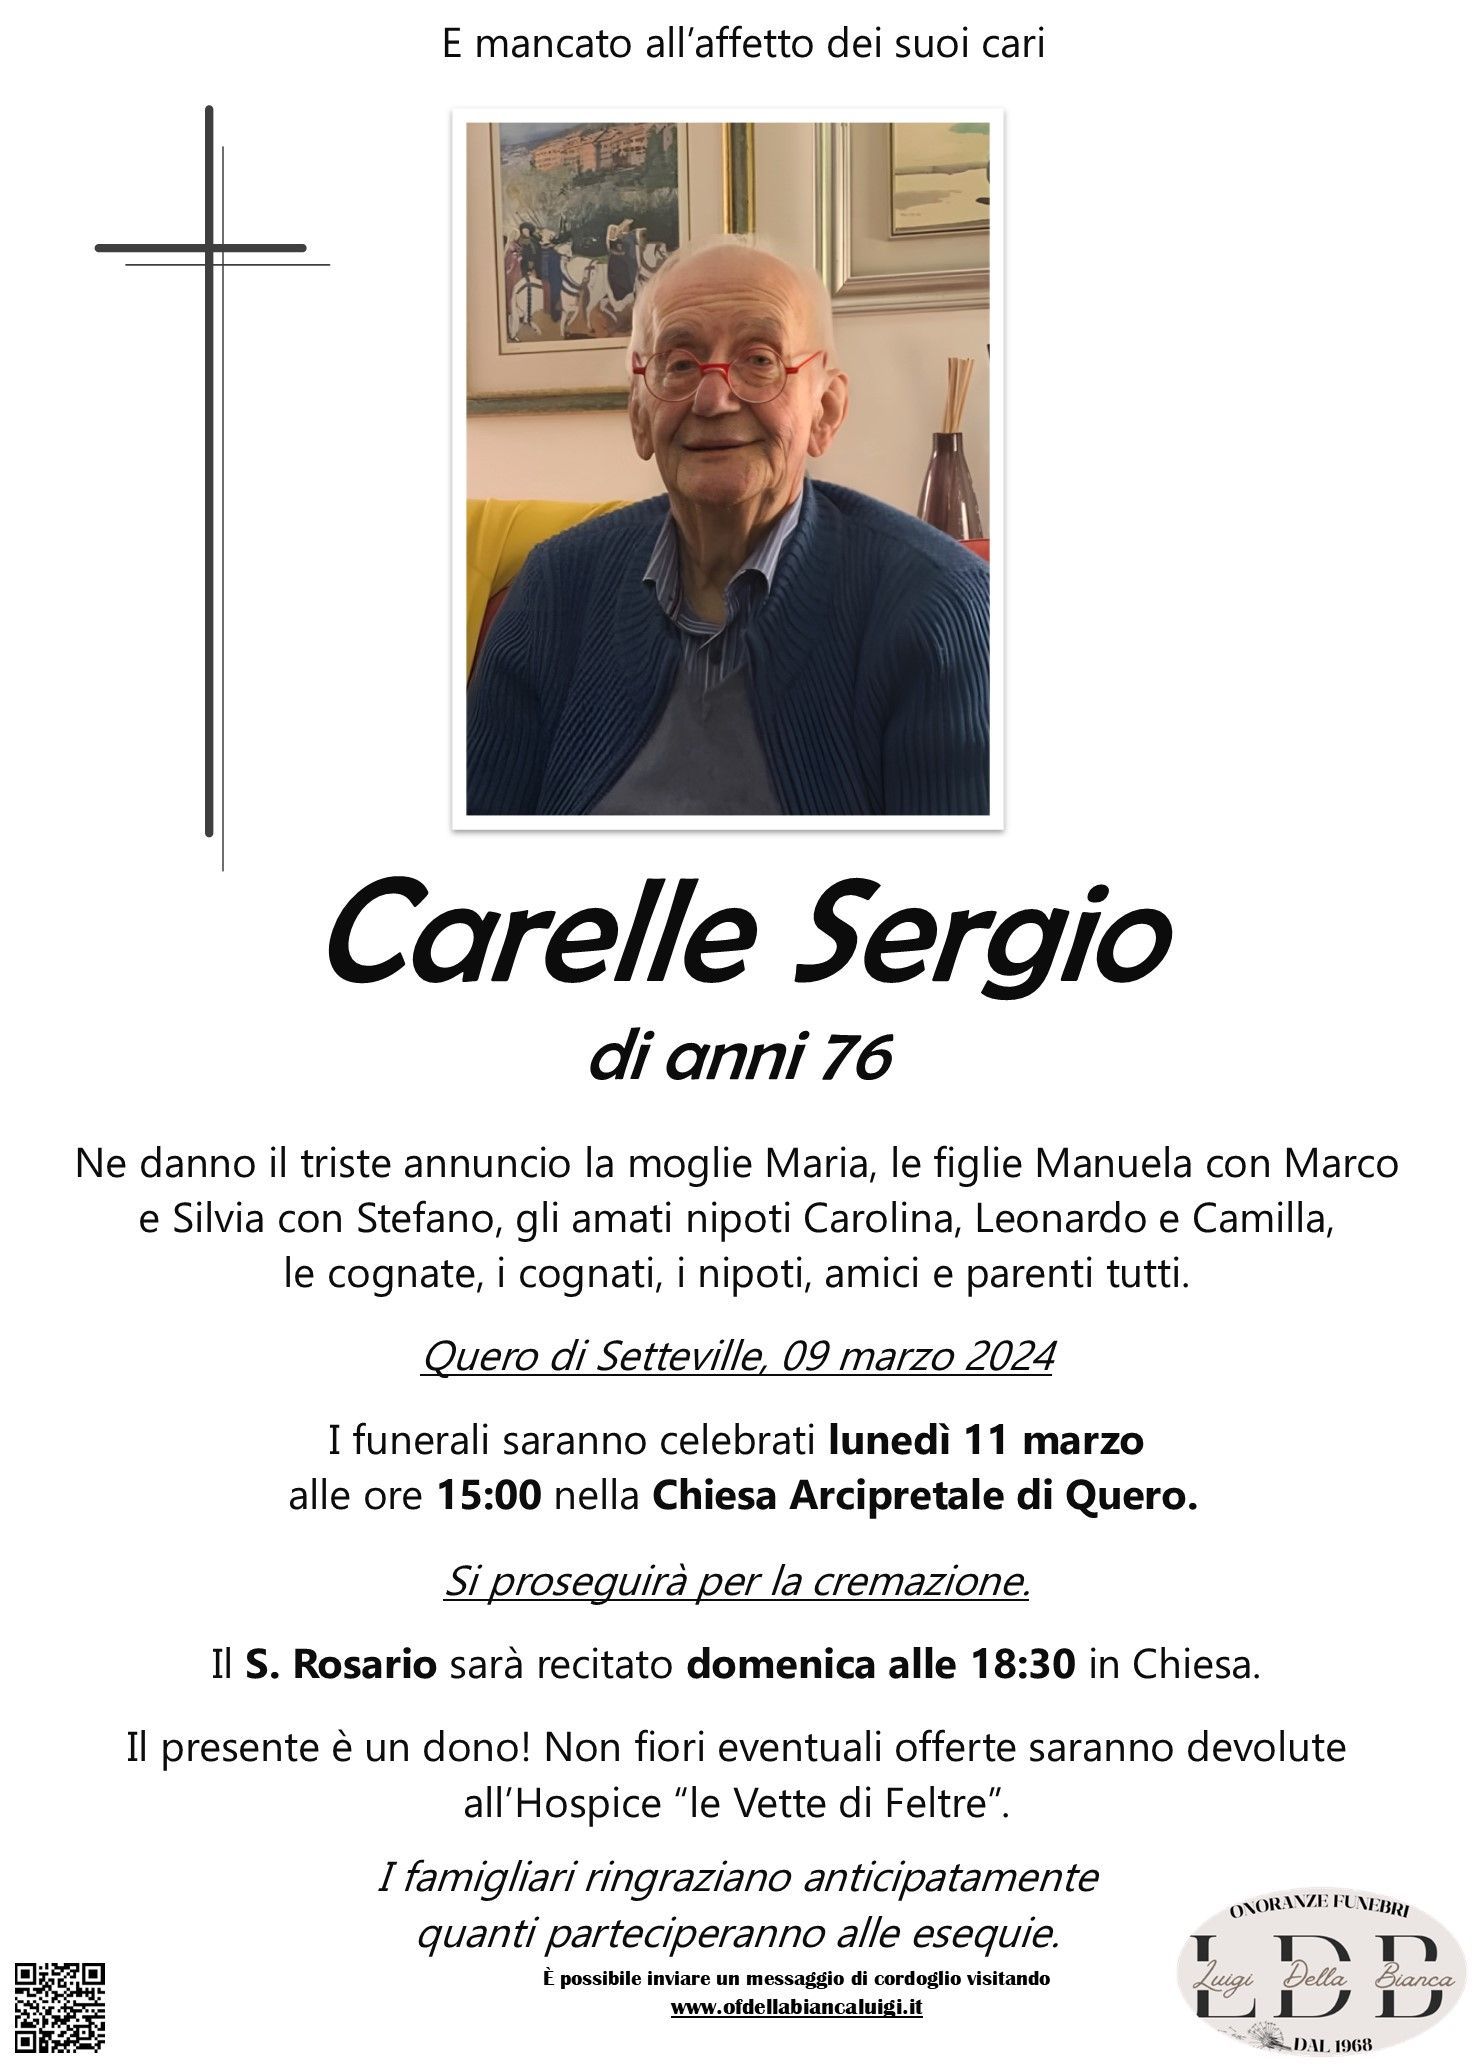 Carelle Sergio 